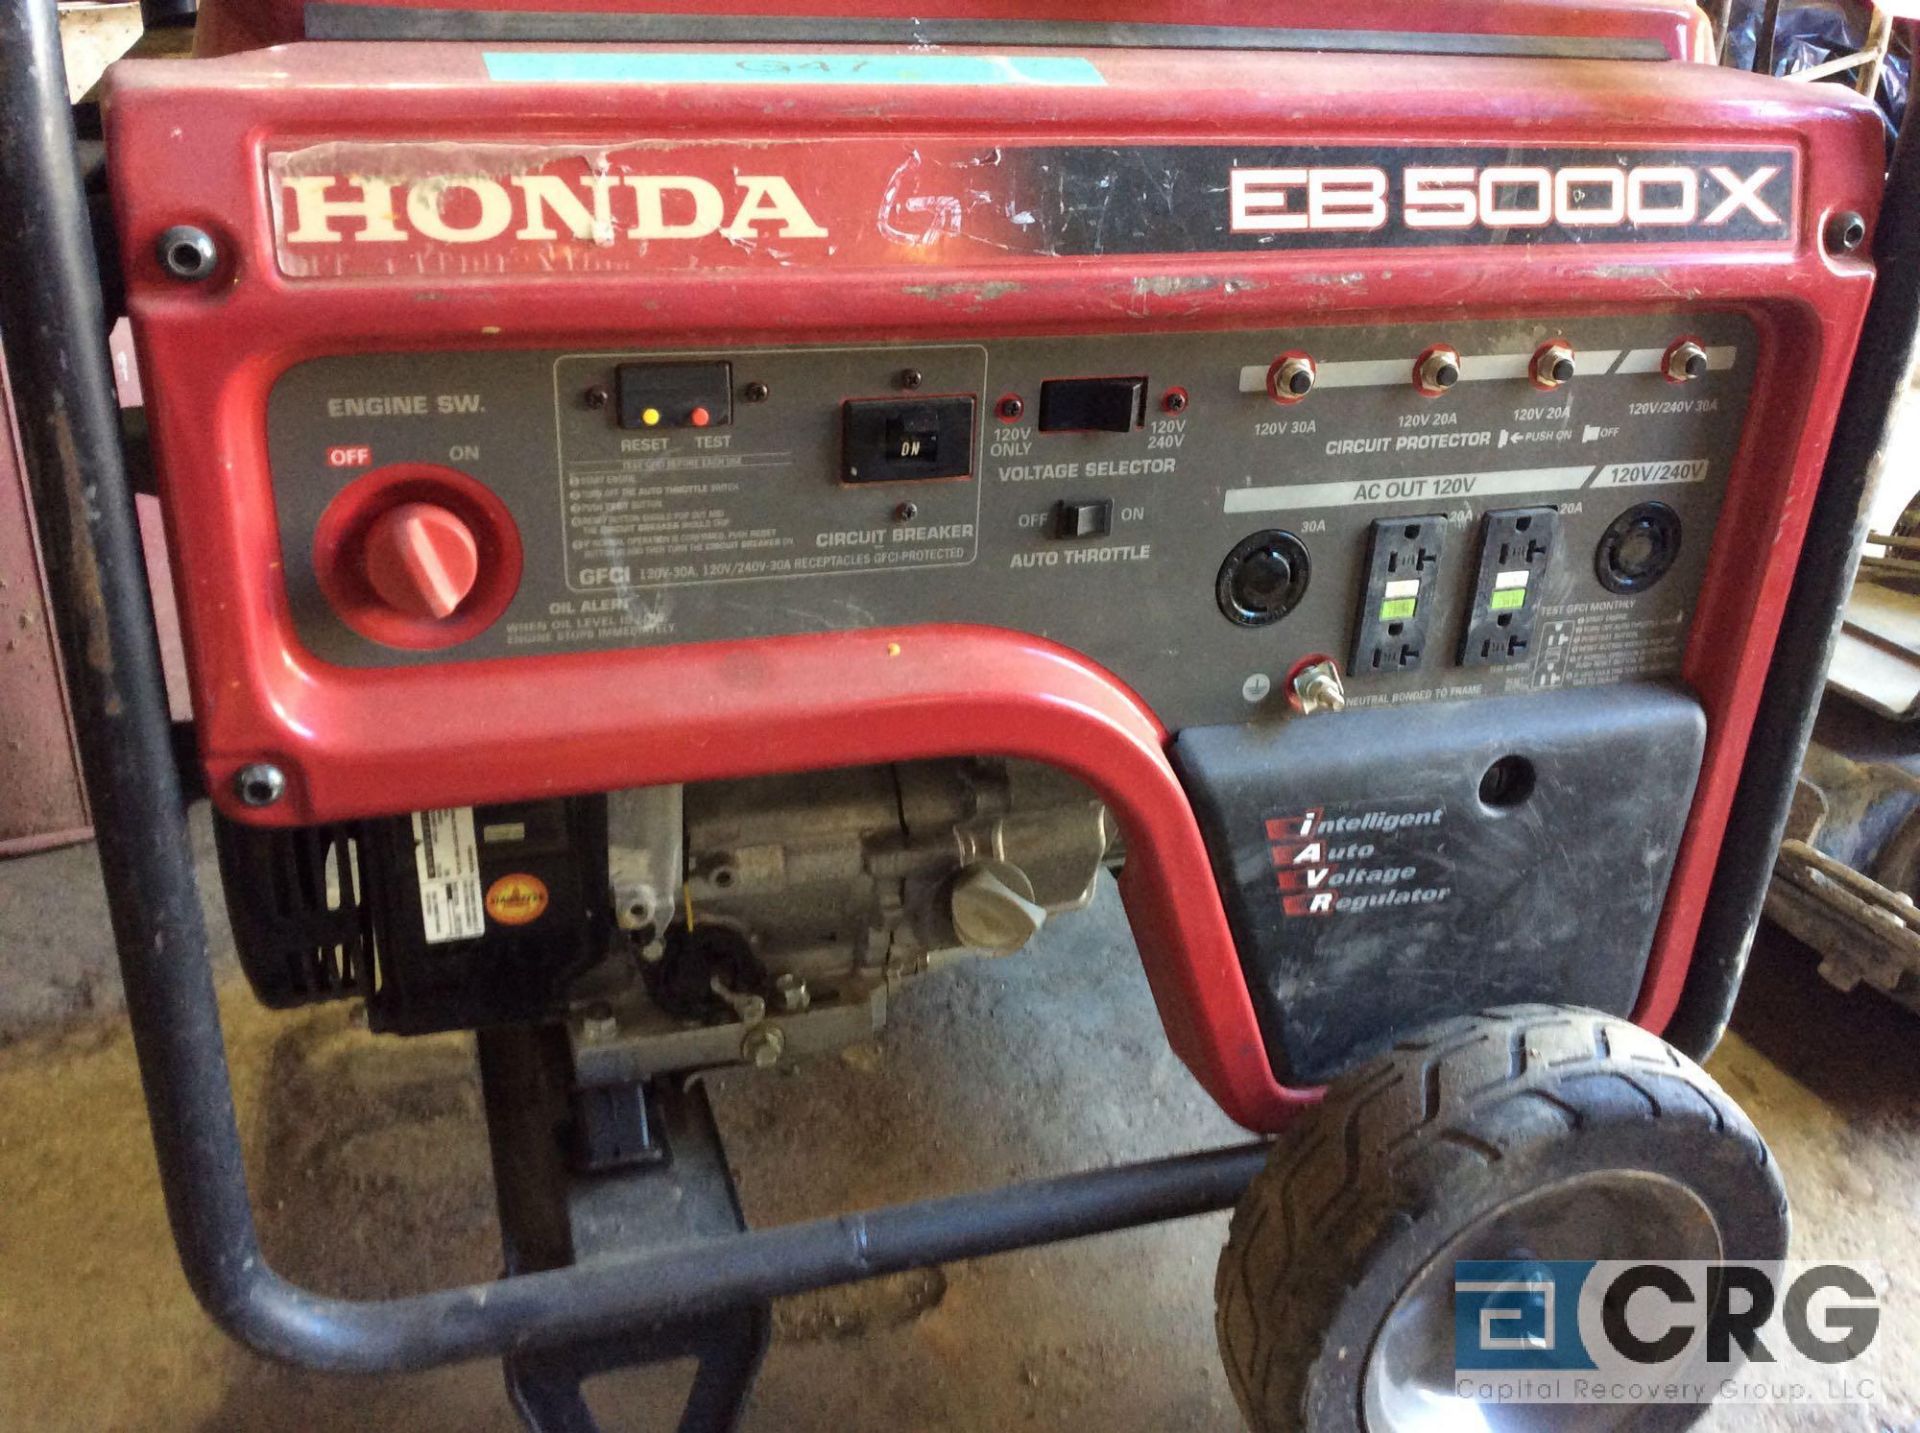 Honda EB5000X portable generator - Image 2 of 3